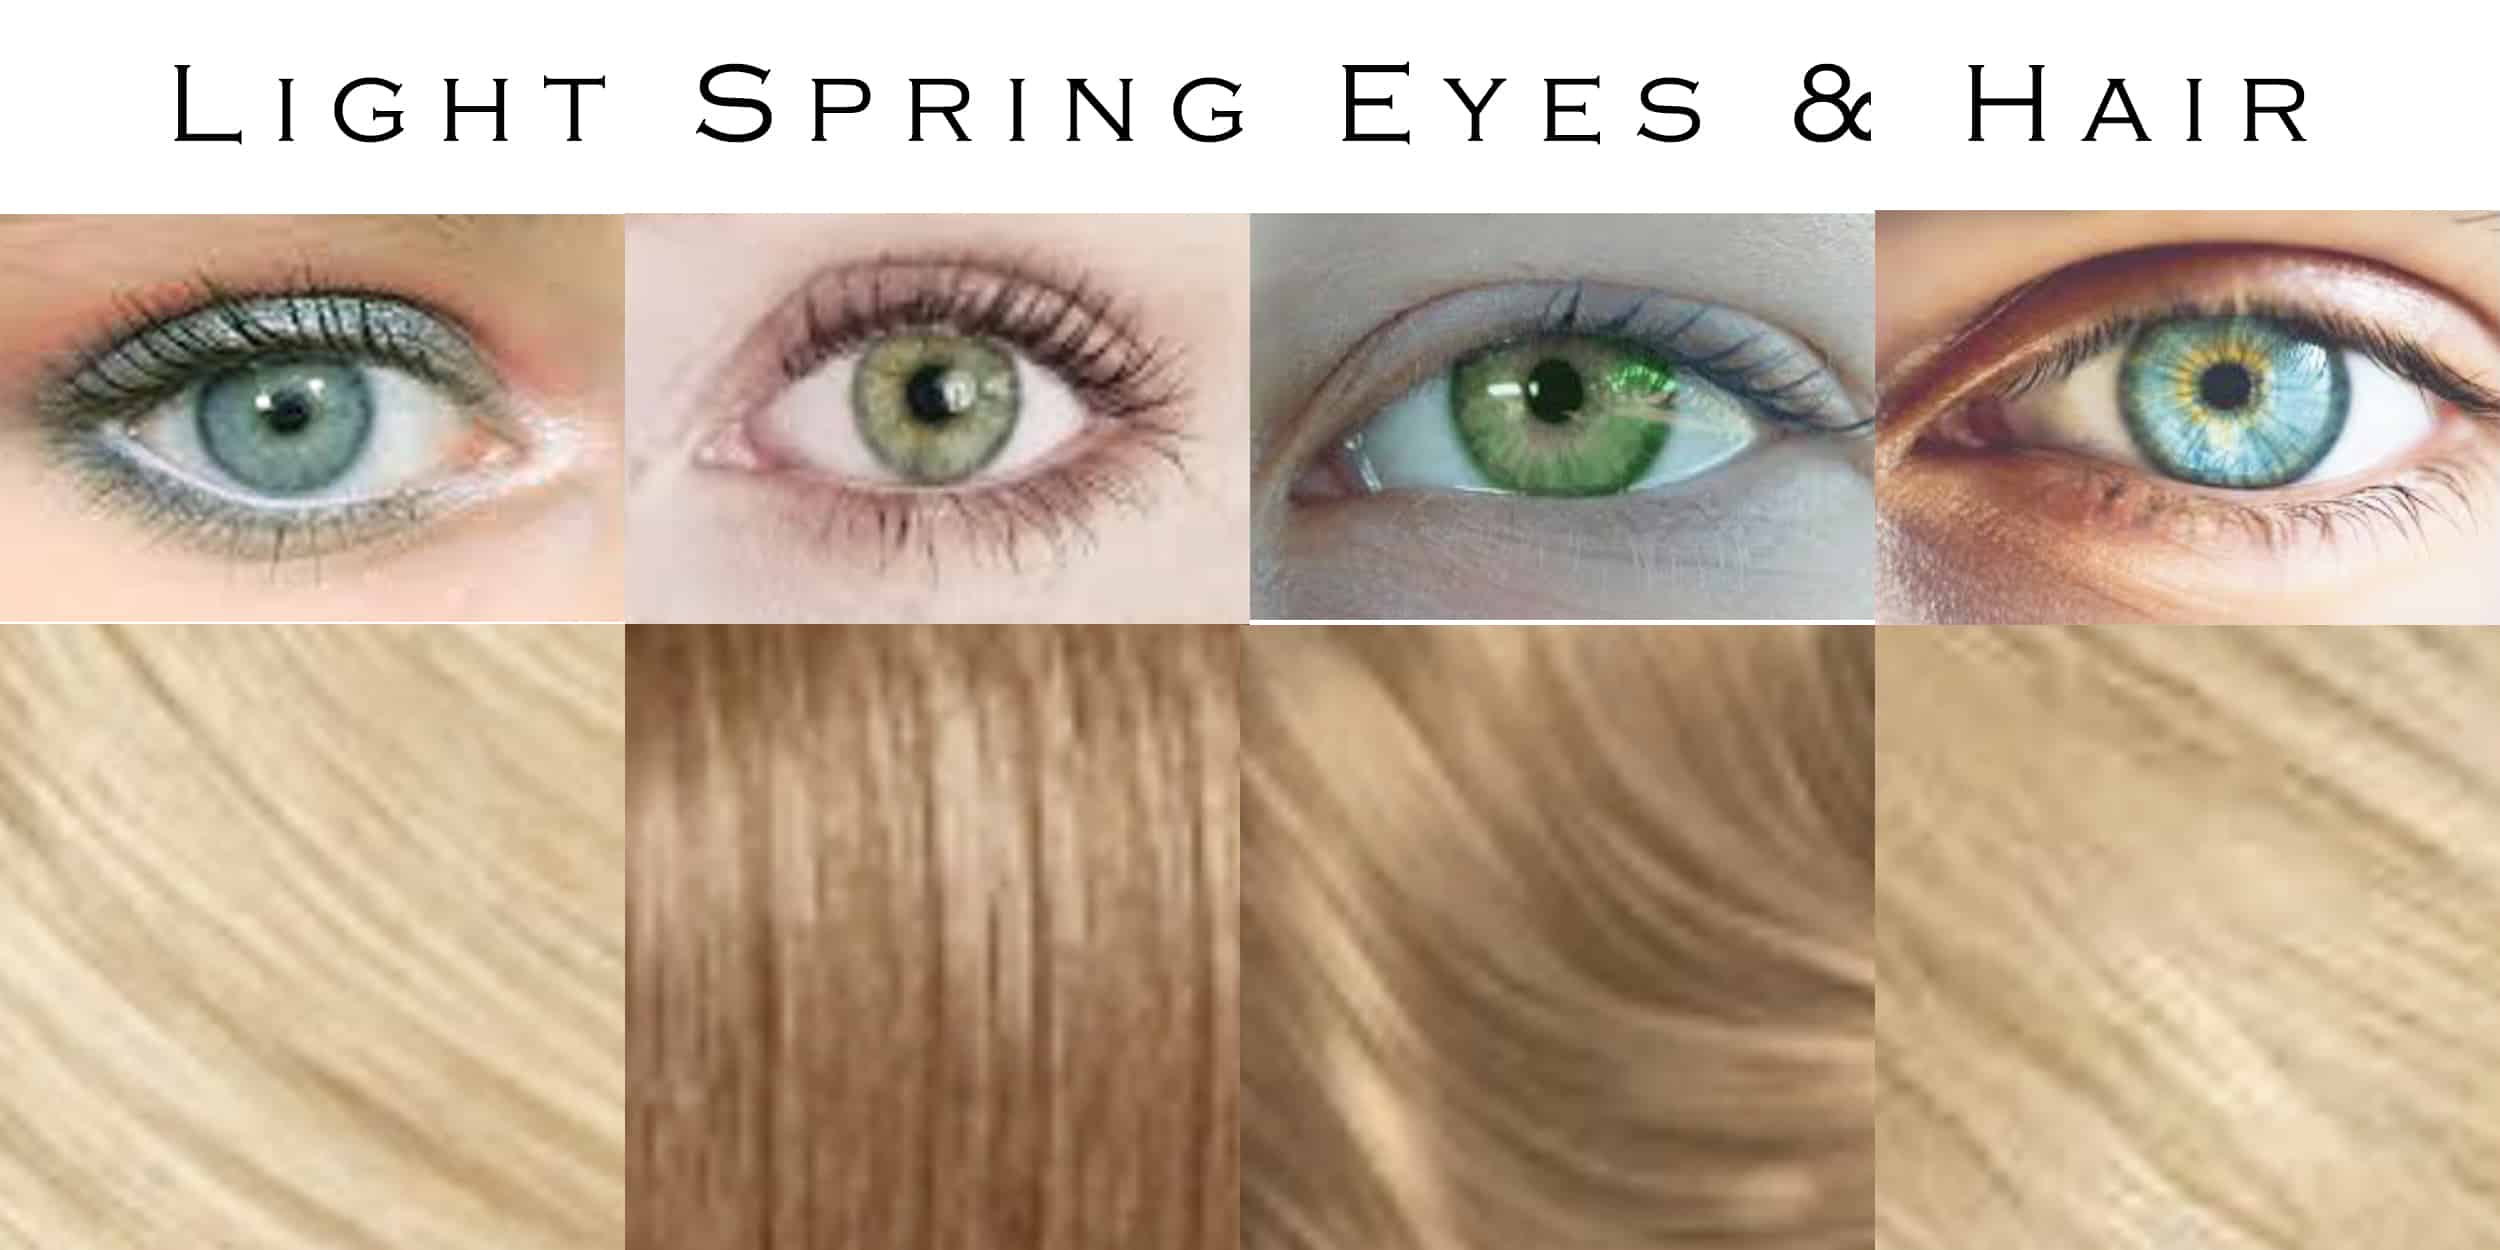 Light spring has fair skin, hair, and eyes.